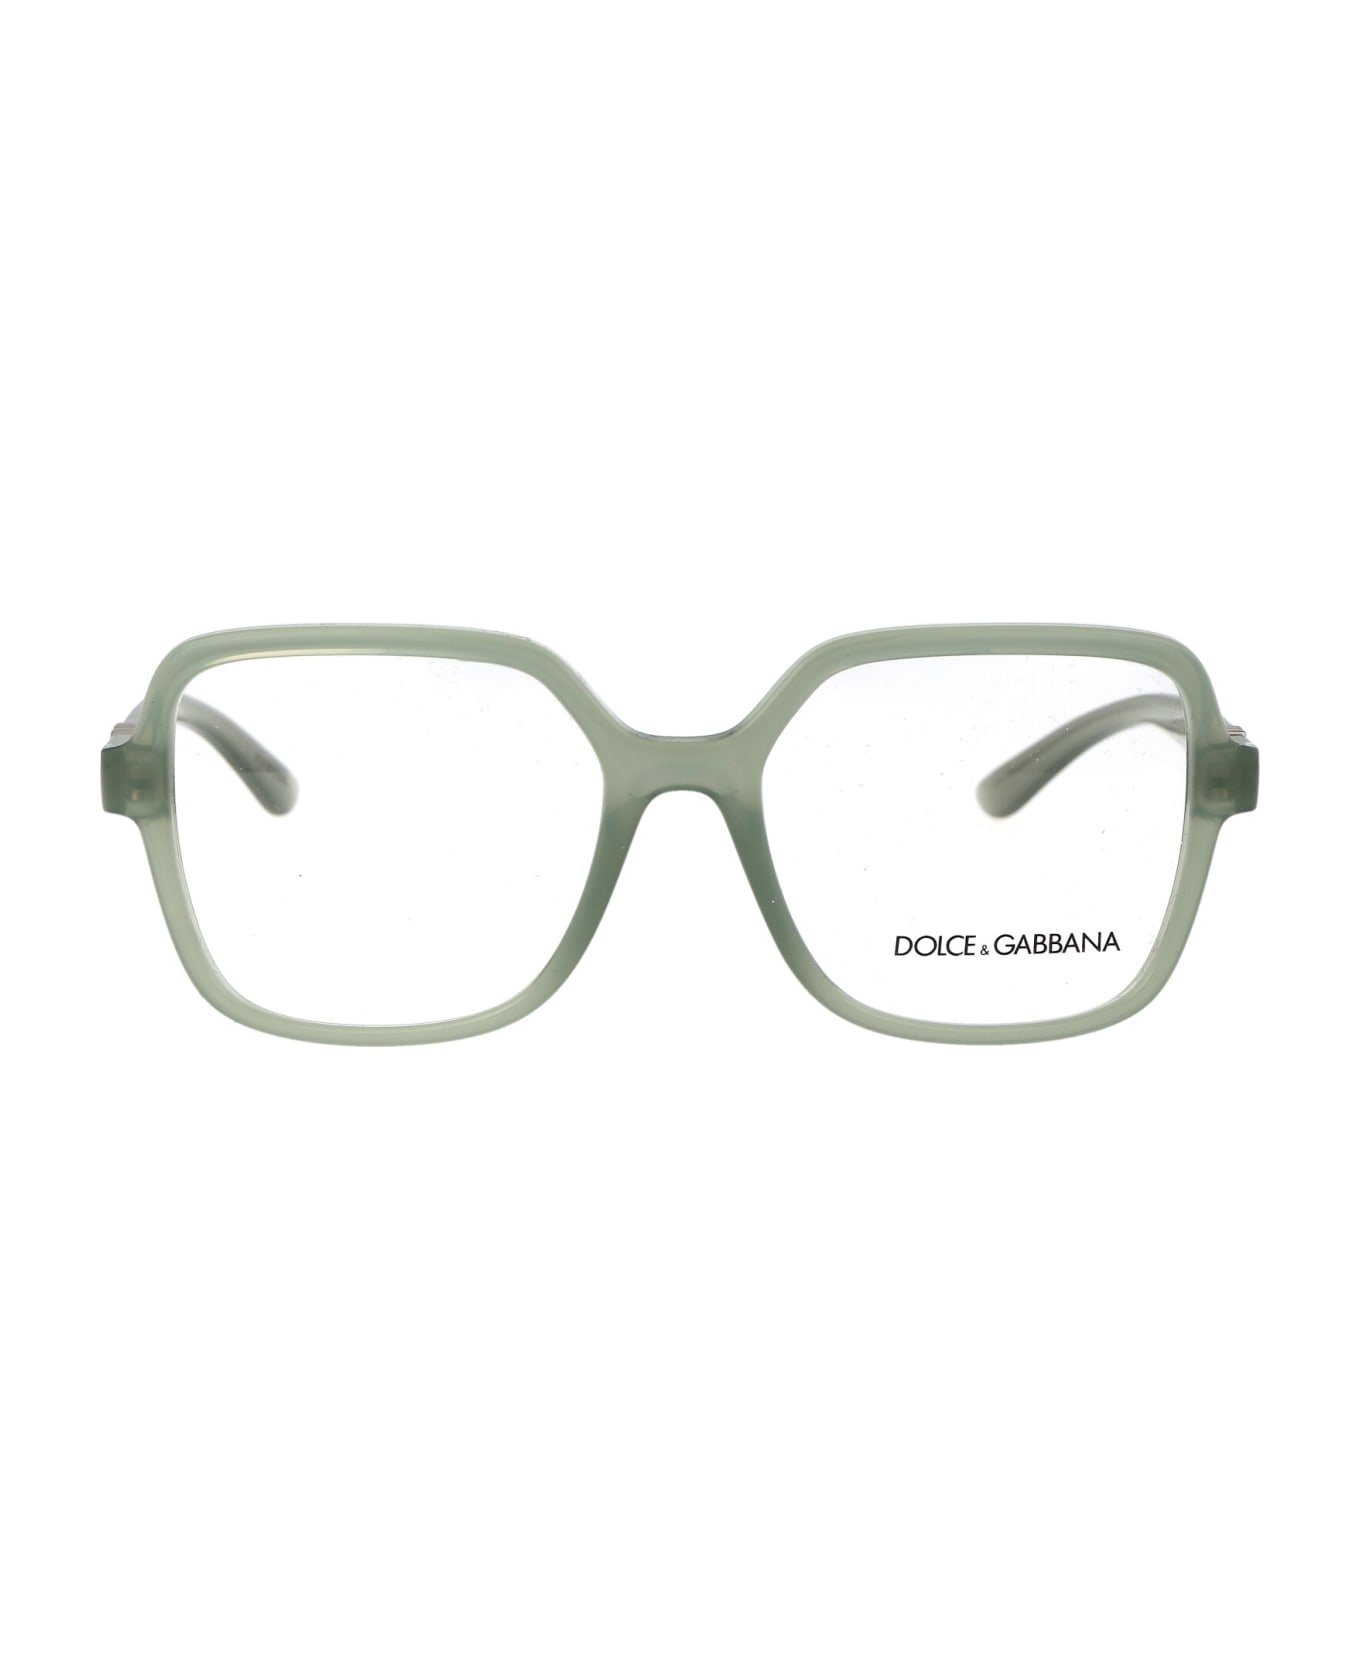 Dolce & Gabbana Eyewear 0dg5105u Glasses - 3345 Milky Green アイウェア